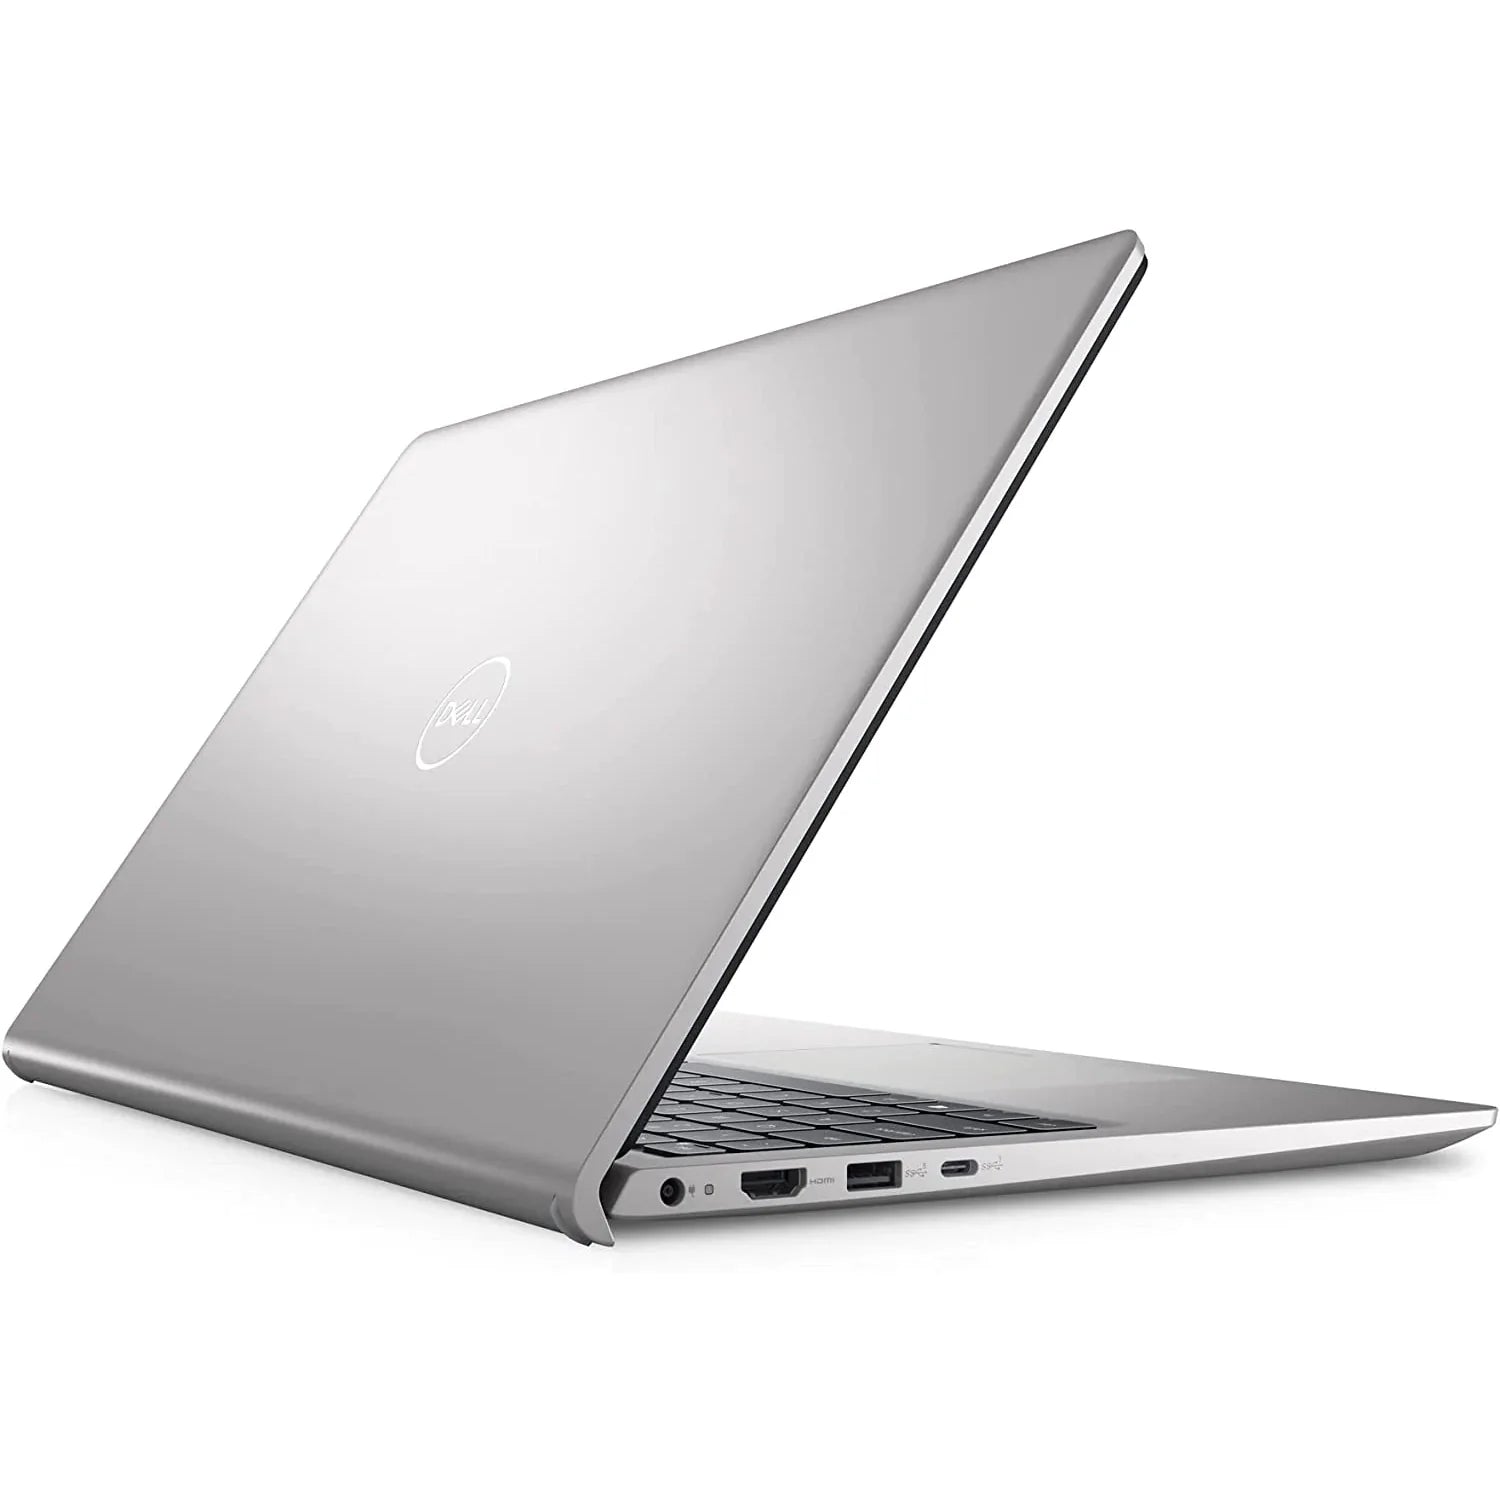 Dell Inspiron 15 3511 Laptop Intel Core i5 8GB RAM 512GB SSD - Refurbished Good